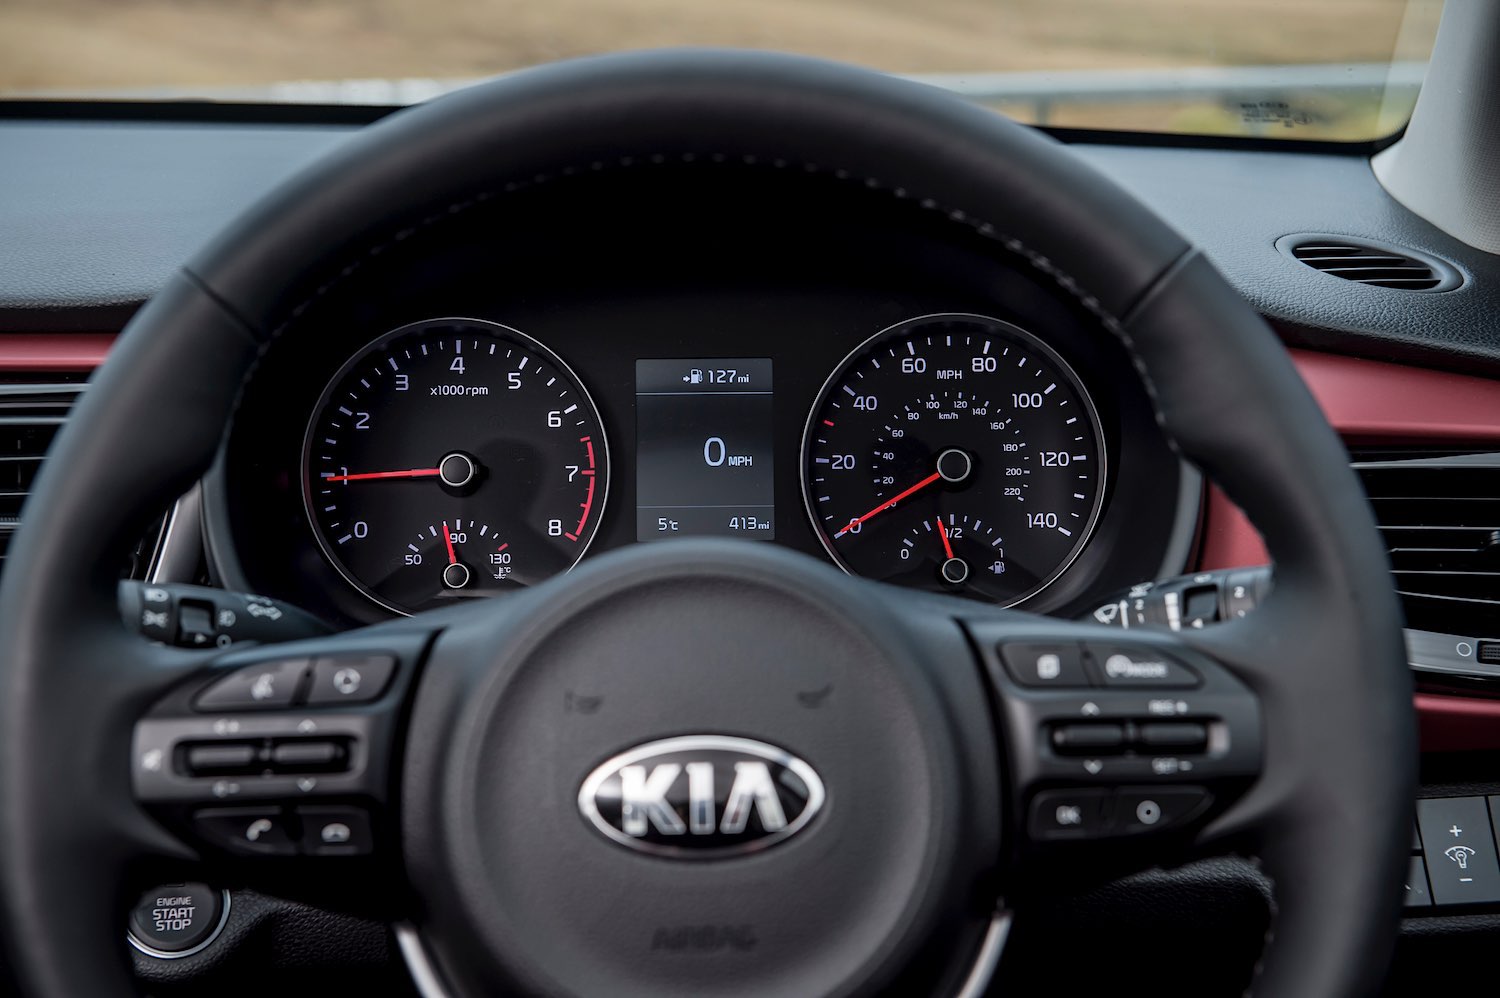 Tom Scanlan reviews the All-New Kia Rio for Drive 11